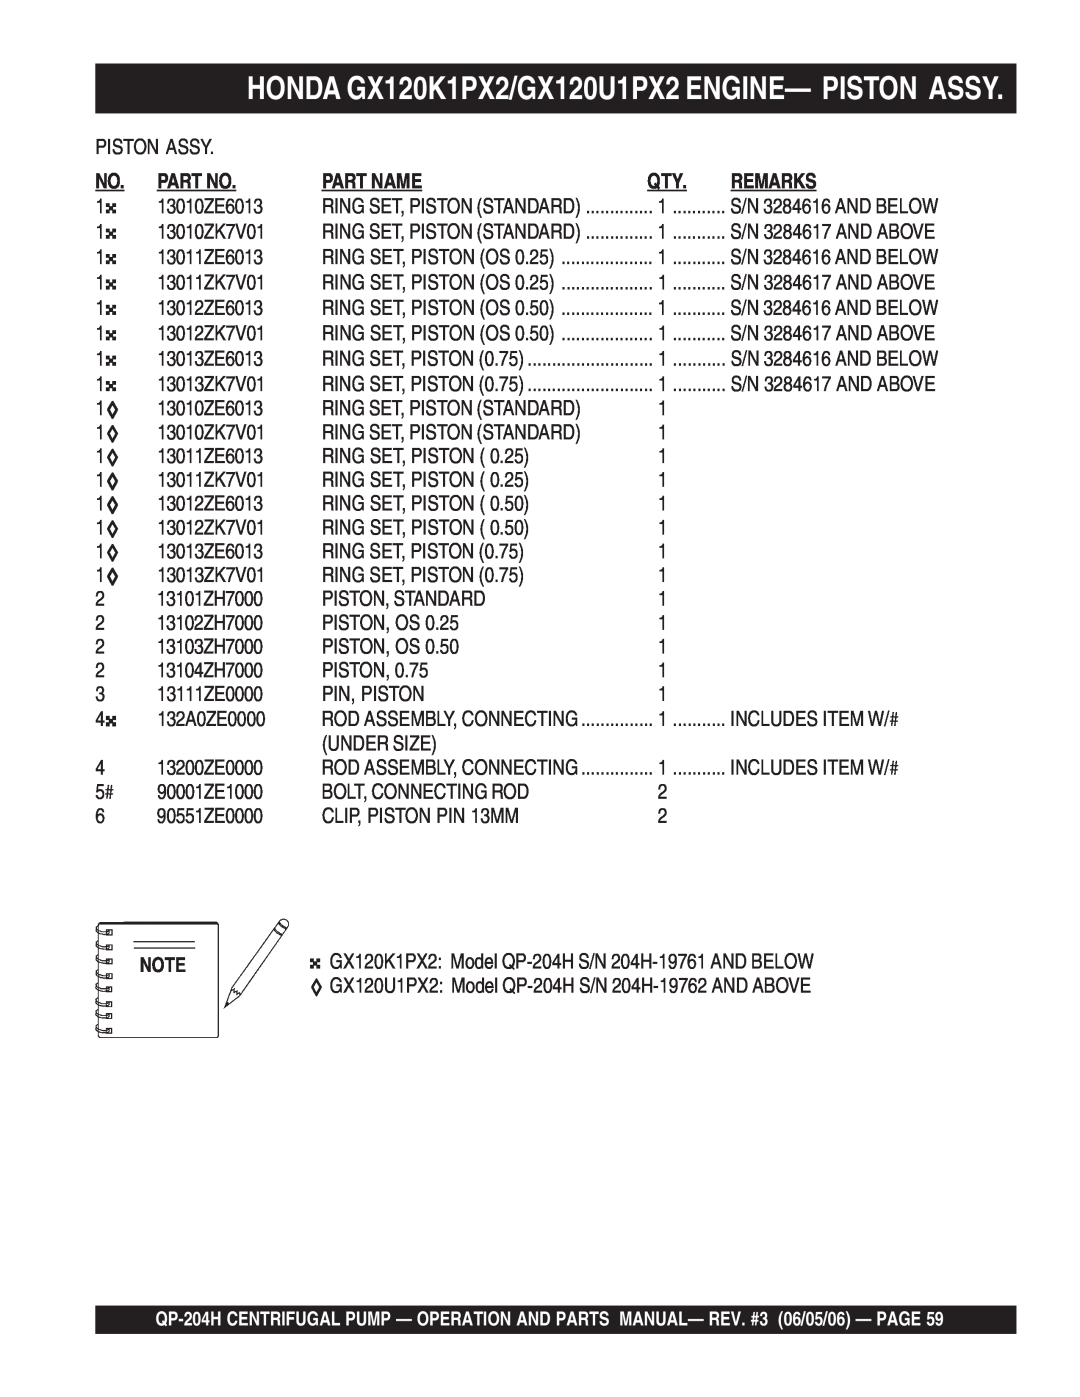 Multiquip QP-204H manual HONDA GX120K1PX2/GX120U1PX2 ENGINE- PISTON ASSY, Piston Assy, Part Name, Remarks 